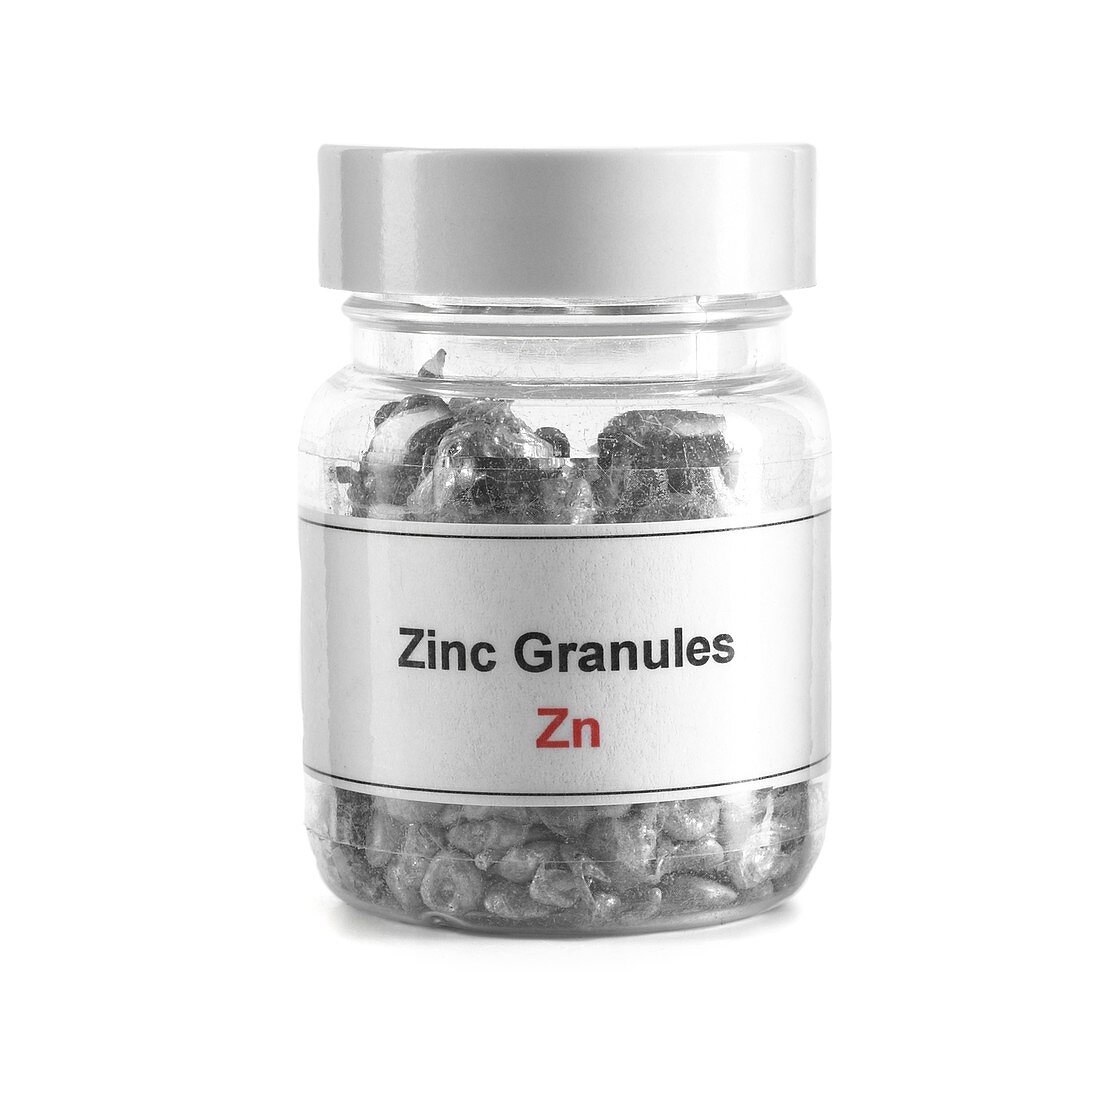 Jar containing zinc granules